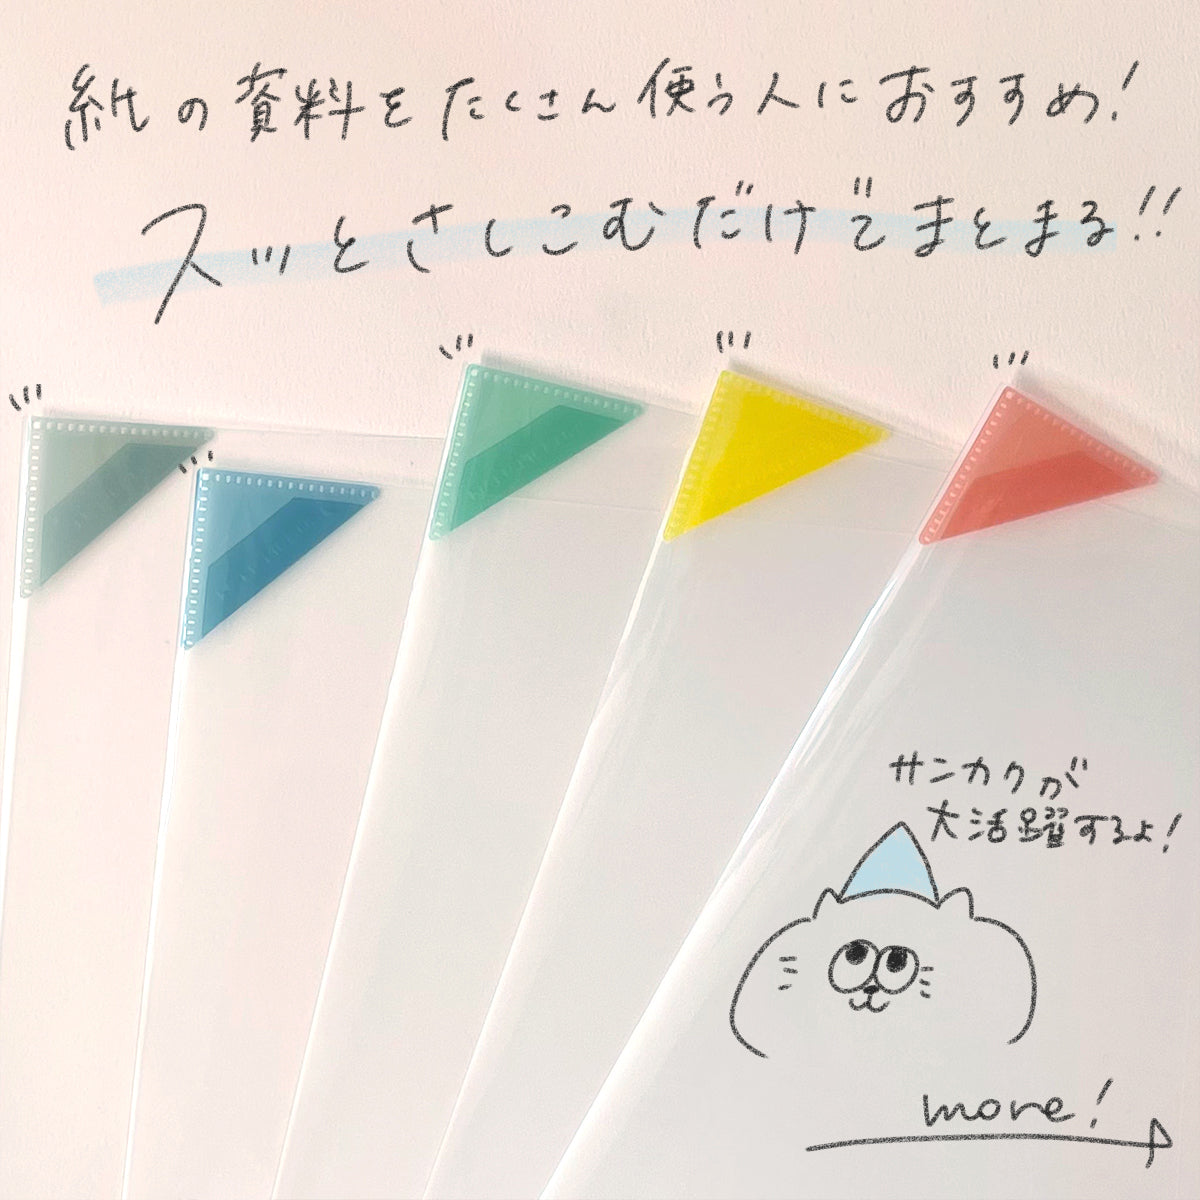 [A4 size] Nanamekuri clear holder vertical type 